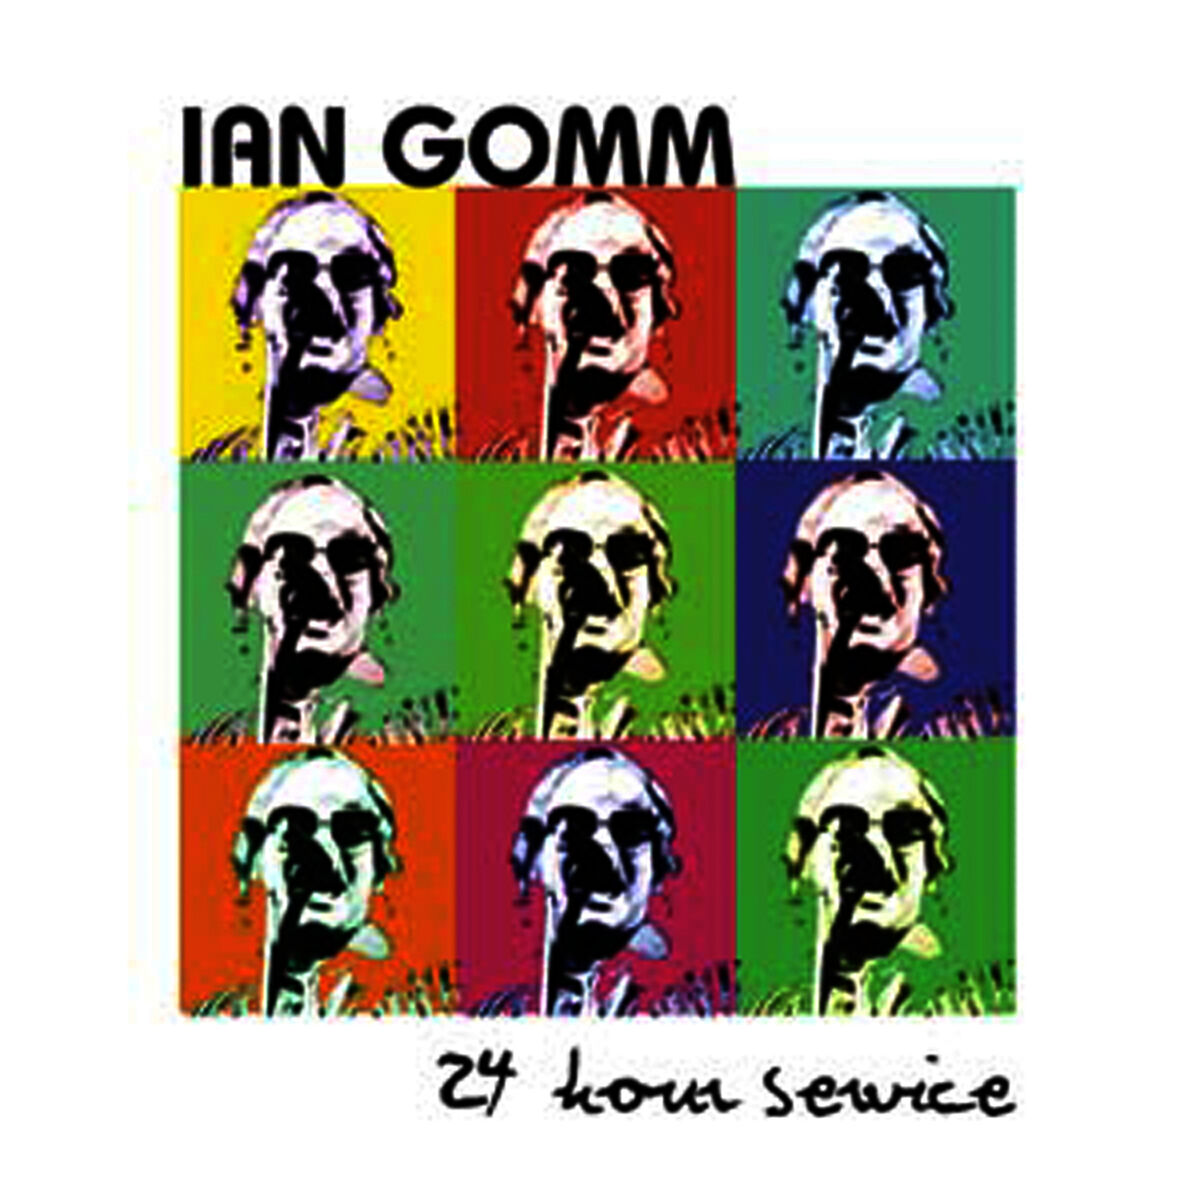 Ian Gomm: albums